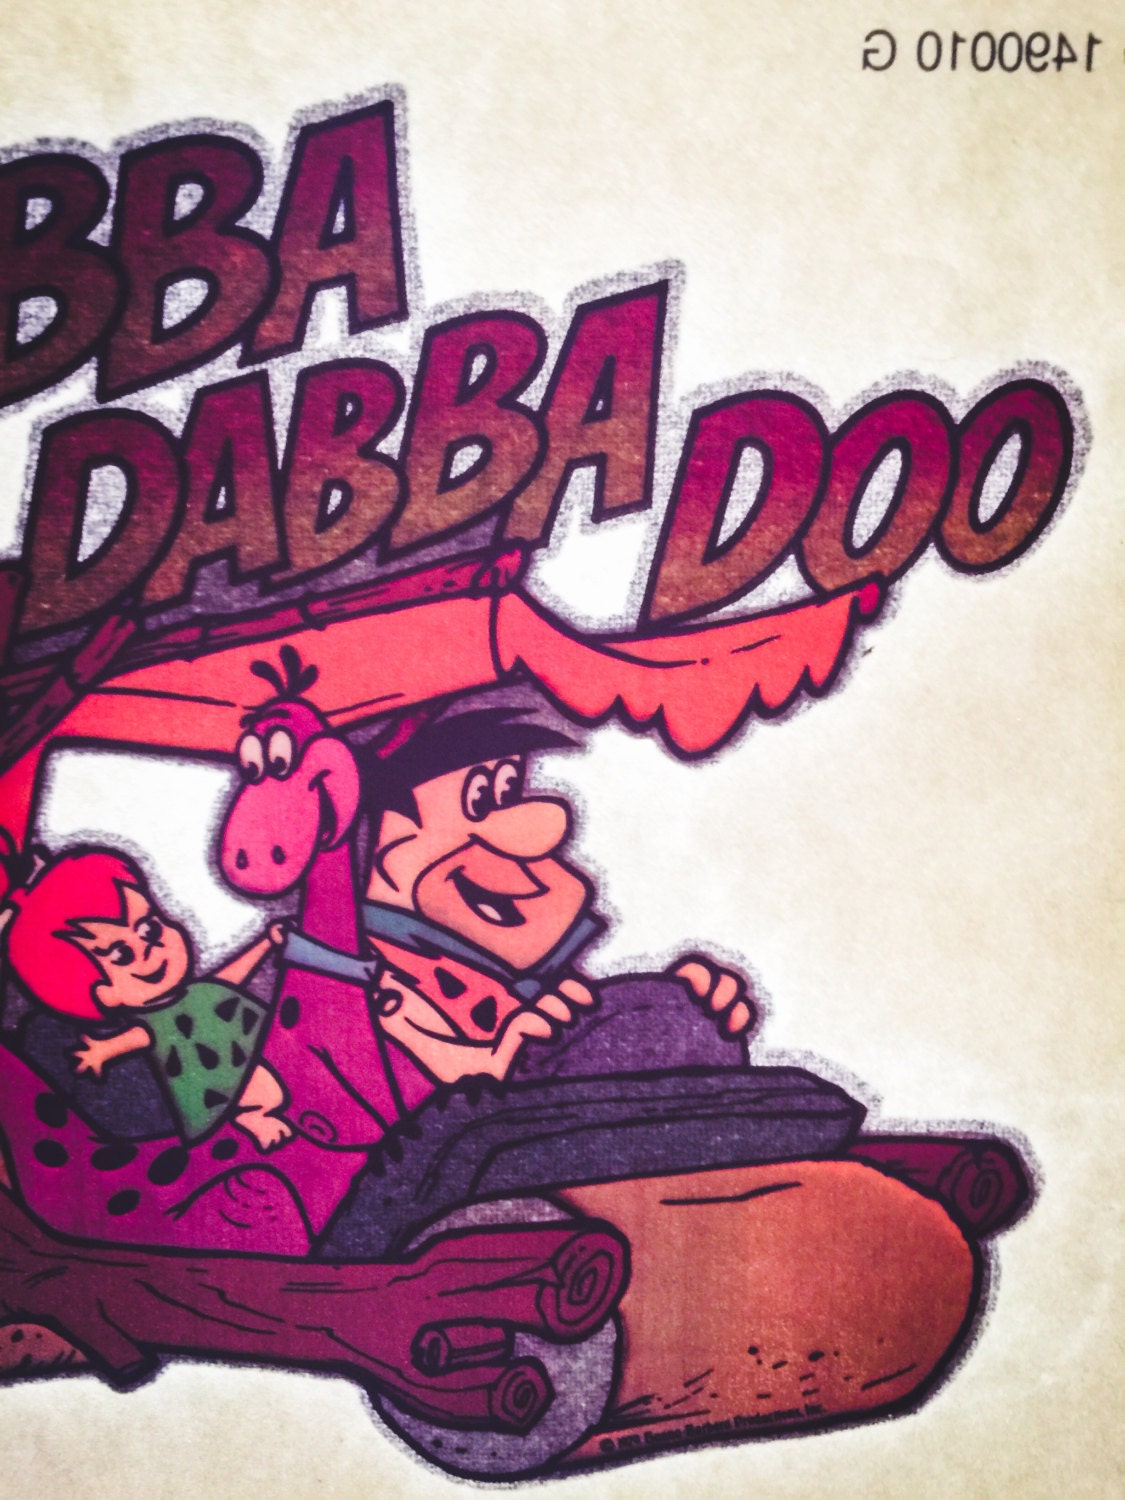 The Flintstones - Yabba Dabba Do Iron On Heat Transfer